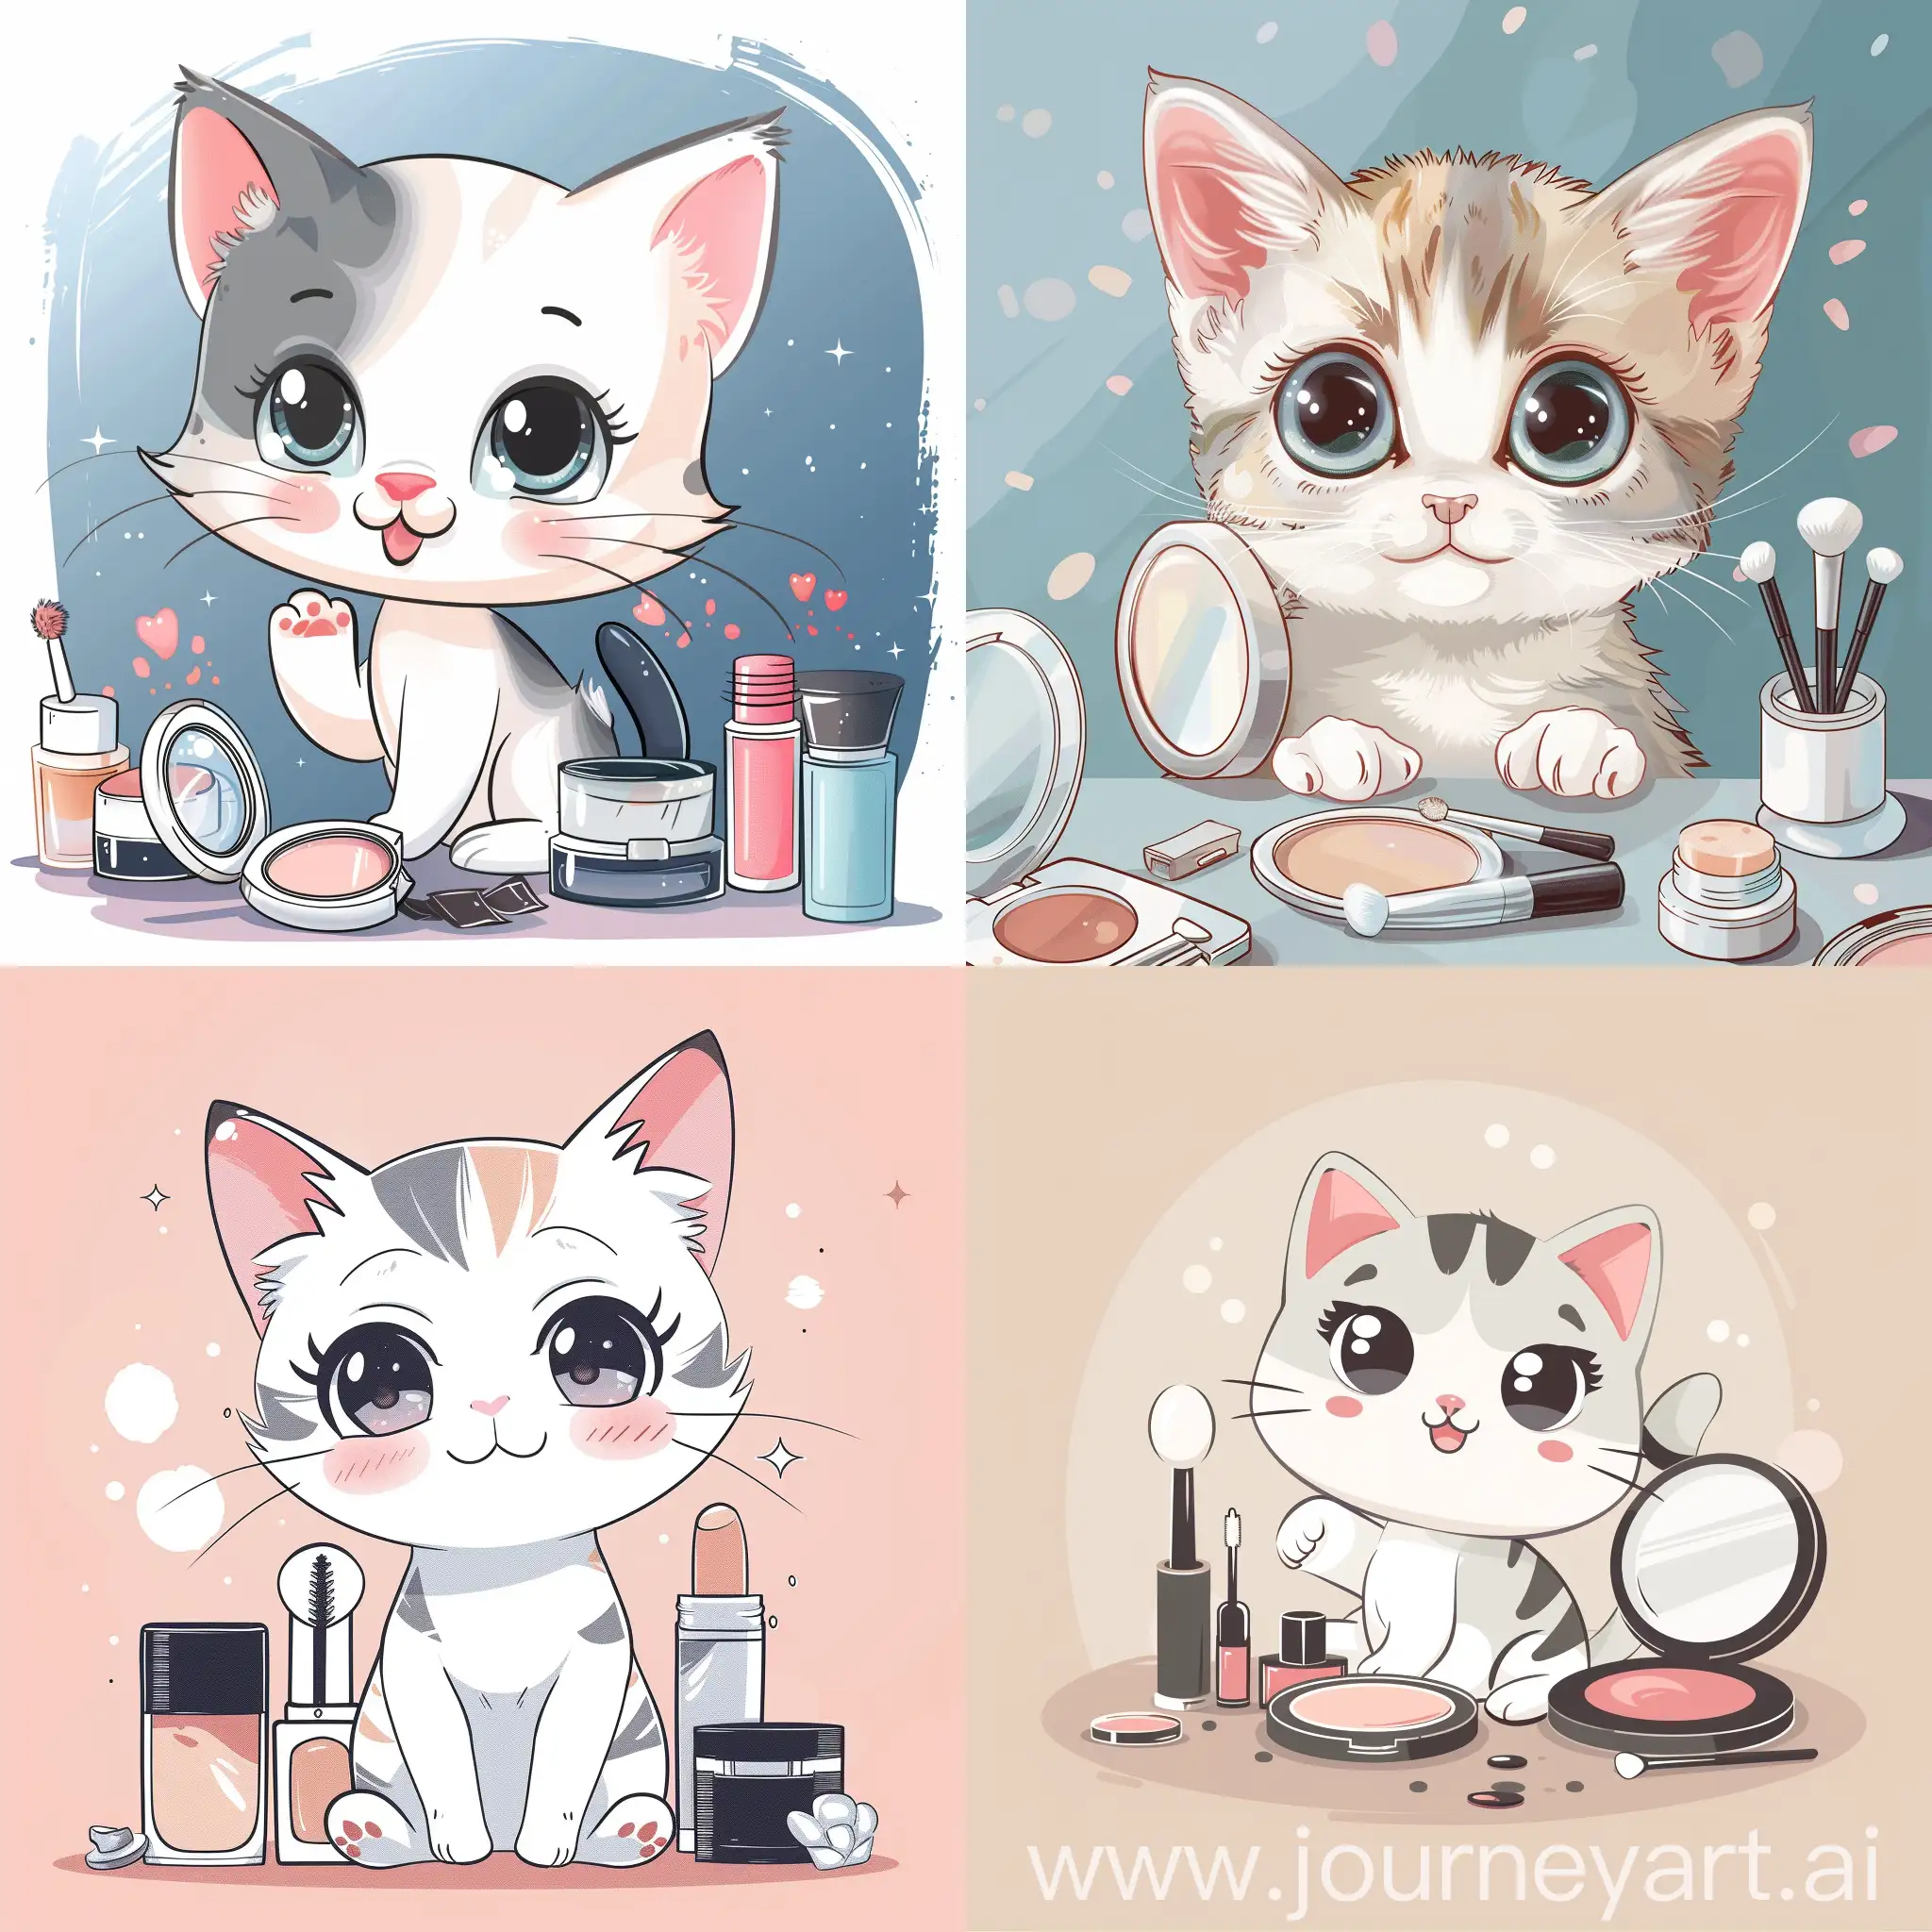 Adorable-AnimeStyle-Kitten-Illustration-for-Cosmetics-Design